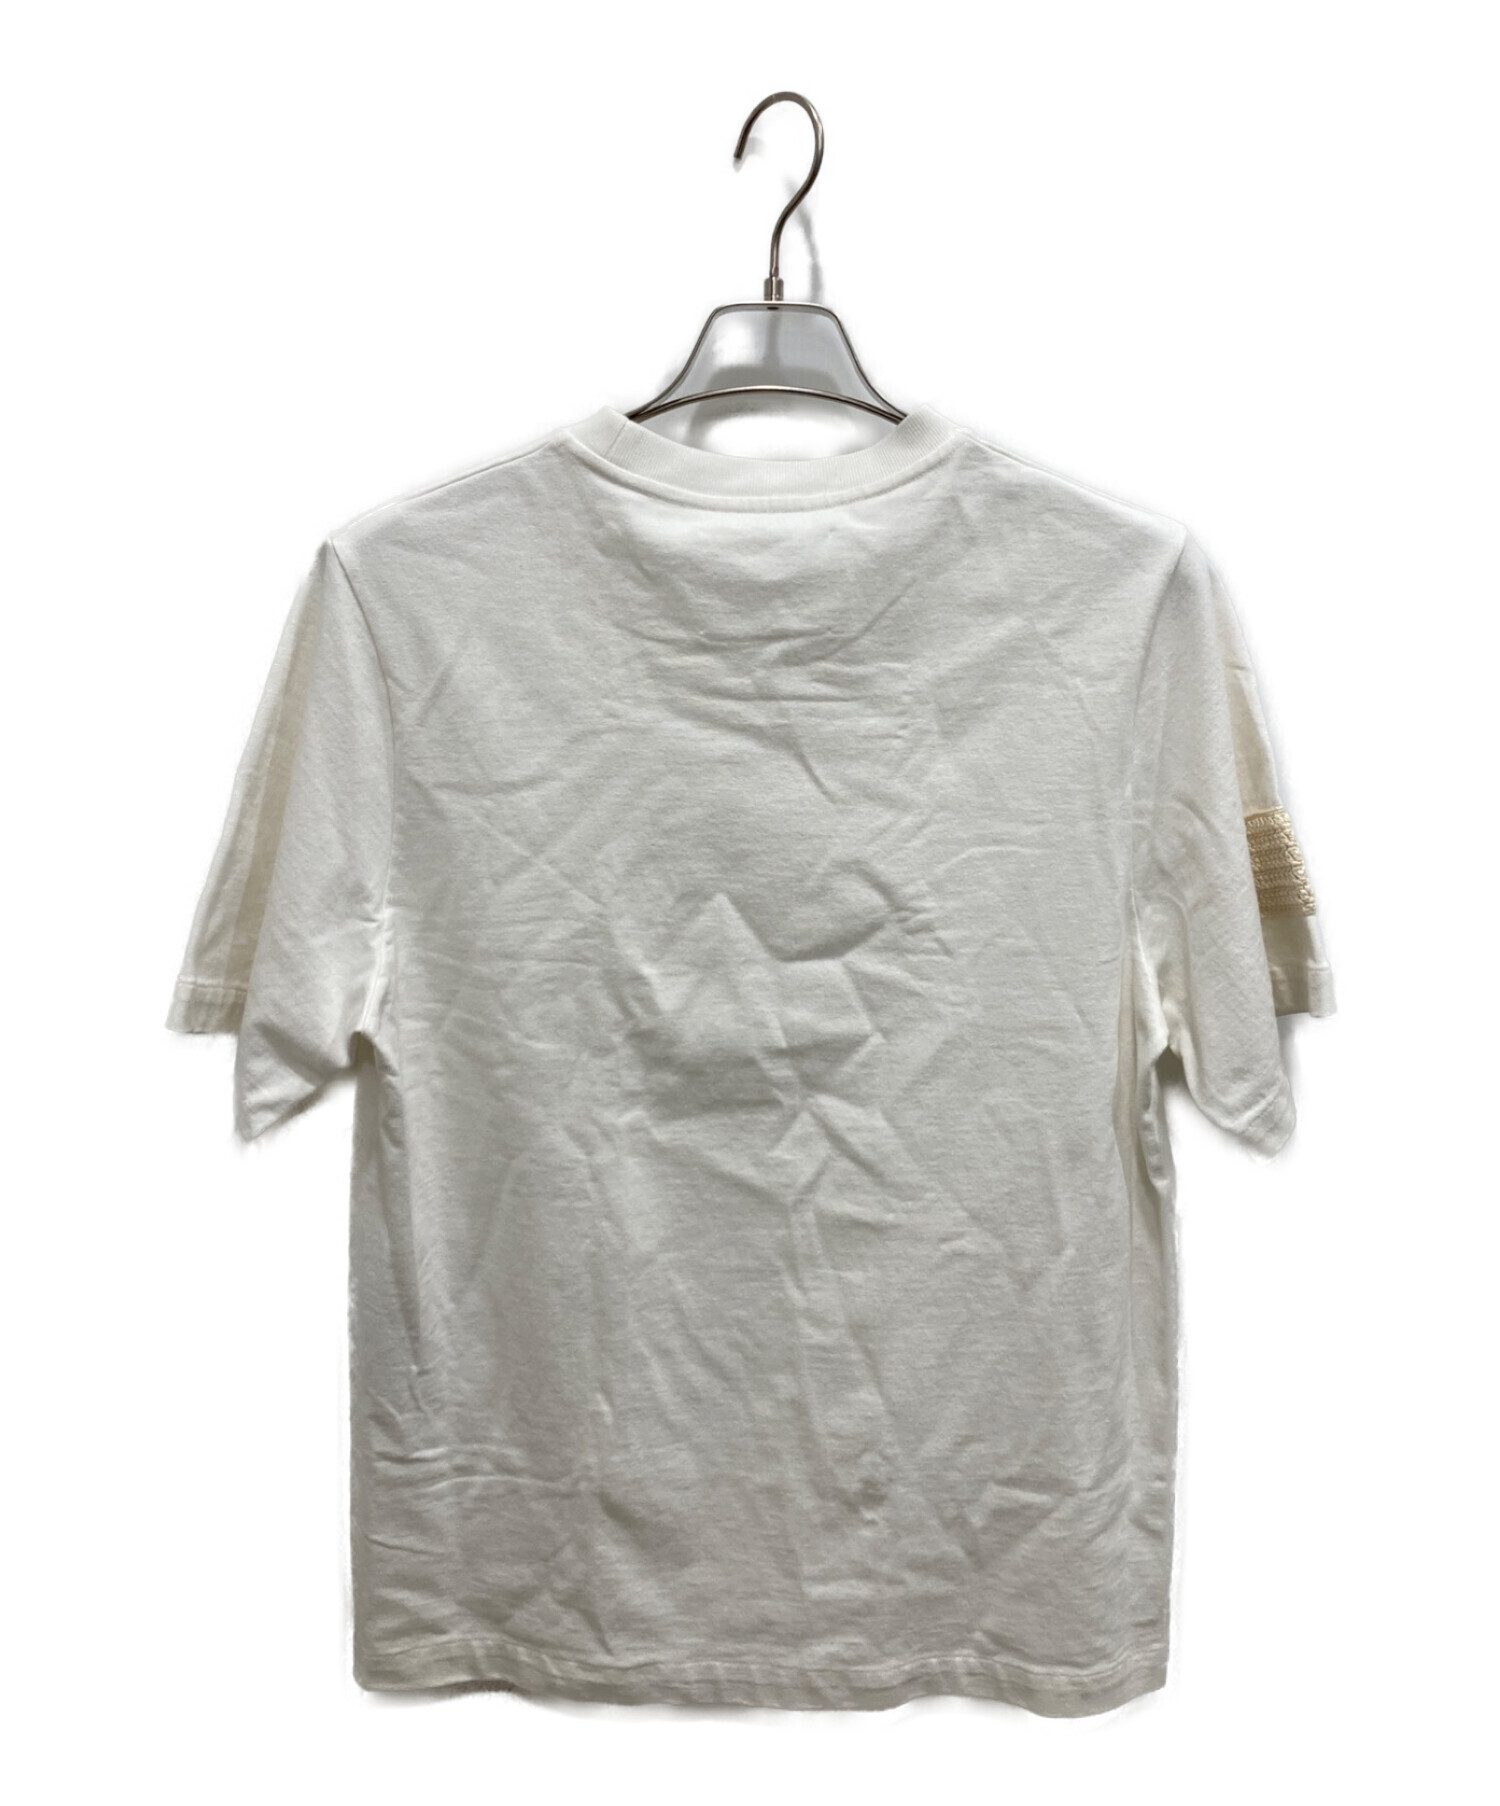 JIL SANDER (ジルサンダー) クロシェ編みパッチ付きTシャツ アイボリー サイズ:S